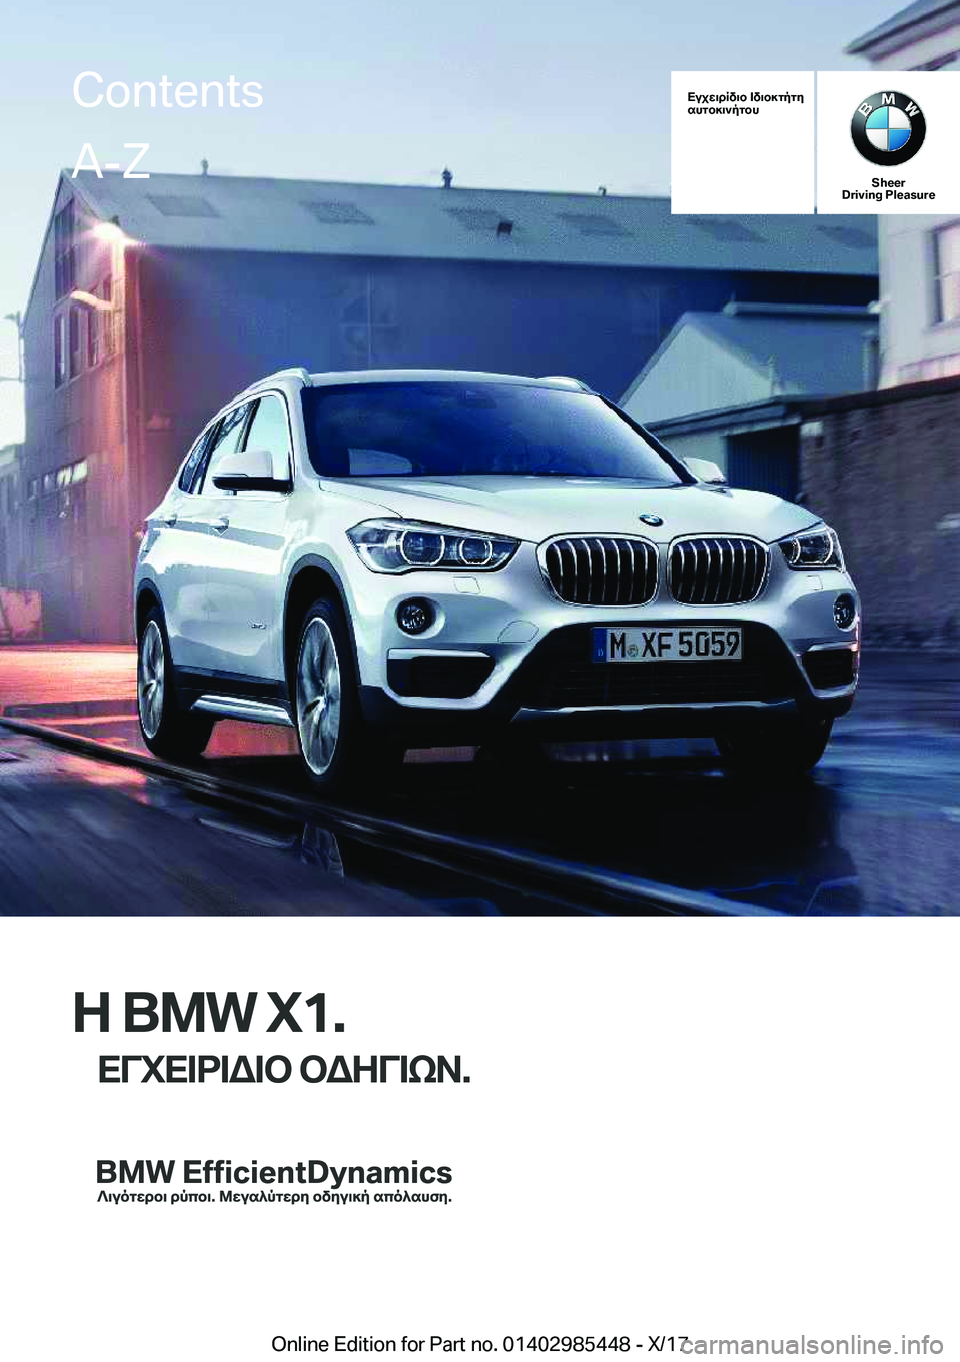 BMW X1 2018  ΟΔΗΓΌΣ ΧΡΉΣΗΣ (in Greek) Xujw\dRv\b�=v\b]gpgy
shgb]\`pgbh
�S�h�e�e�r
�D�r�i�v�i�n�g��P�l�e�a�s�u�r�e
;��B�M�W��X�1�.
XViX=d=W=b�bW;V=kA�.
�C�o�n�t�e�n�t�s�A�-�Z
�O�n�l�i�n�